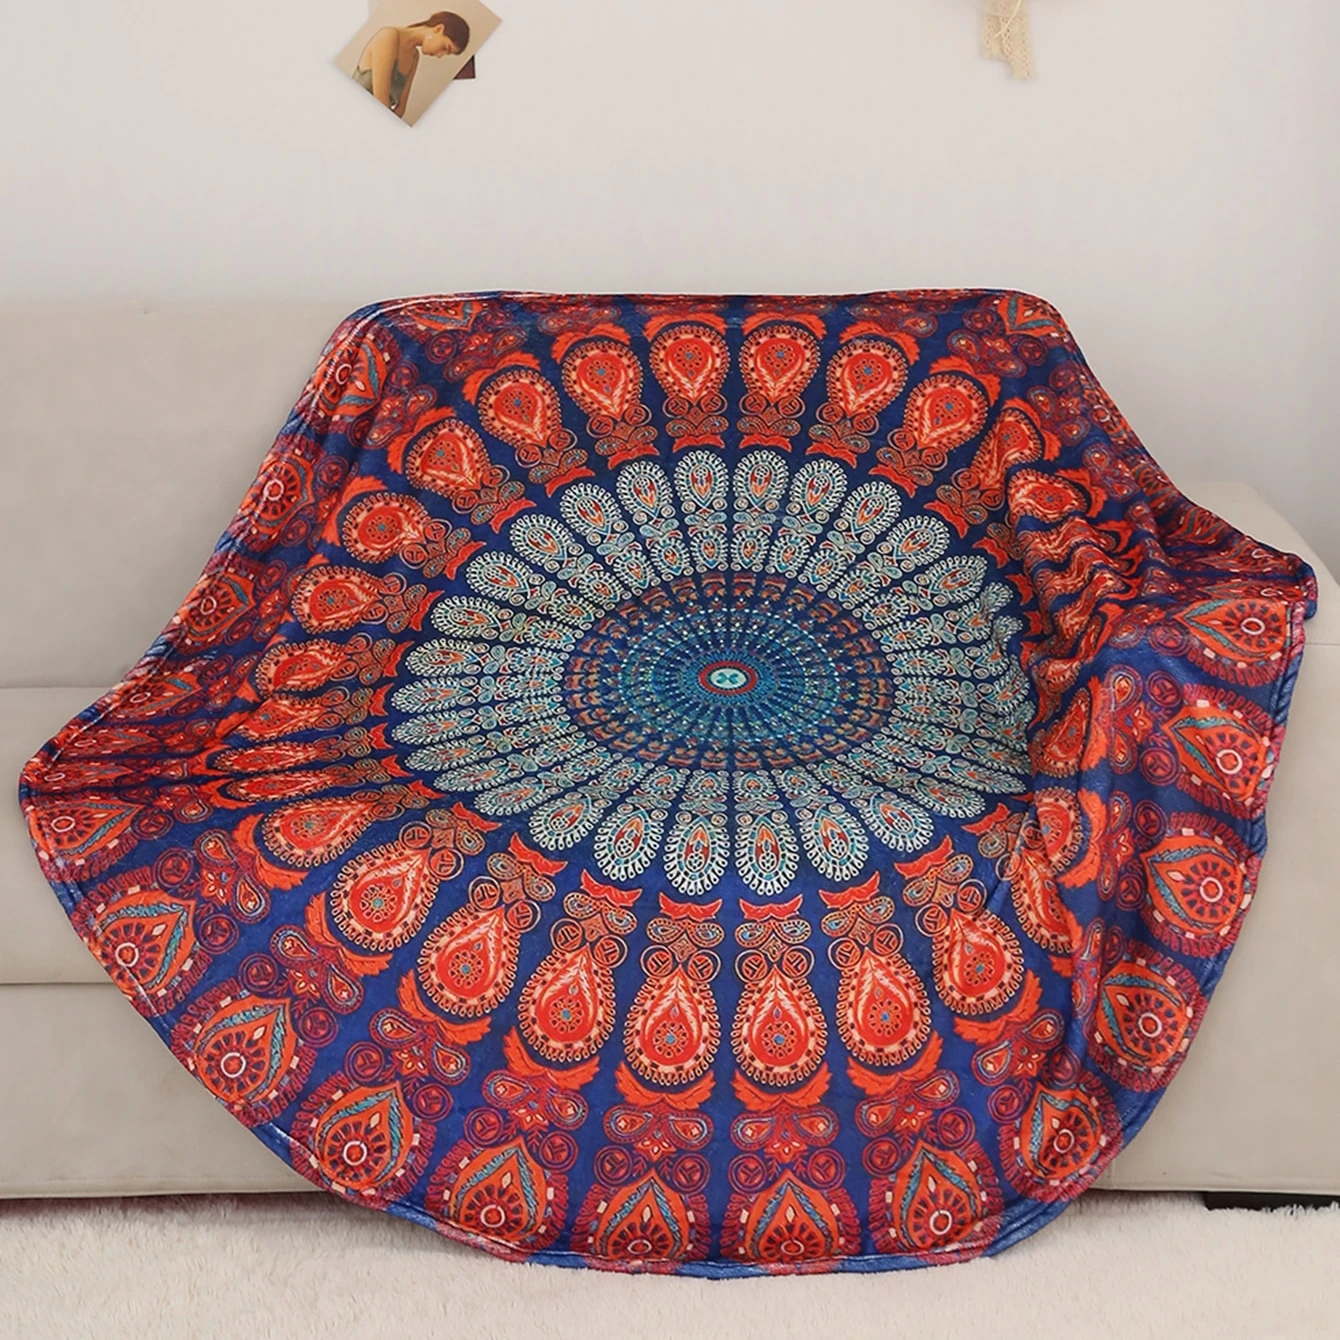 Mandala Pattern Round Blanket, Geometry Metatron Cube Powerful Symbol Travel Circular Lightweight Sofa Bed Cover Throw Blankets